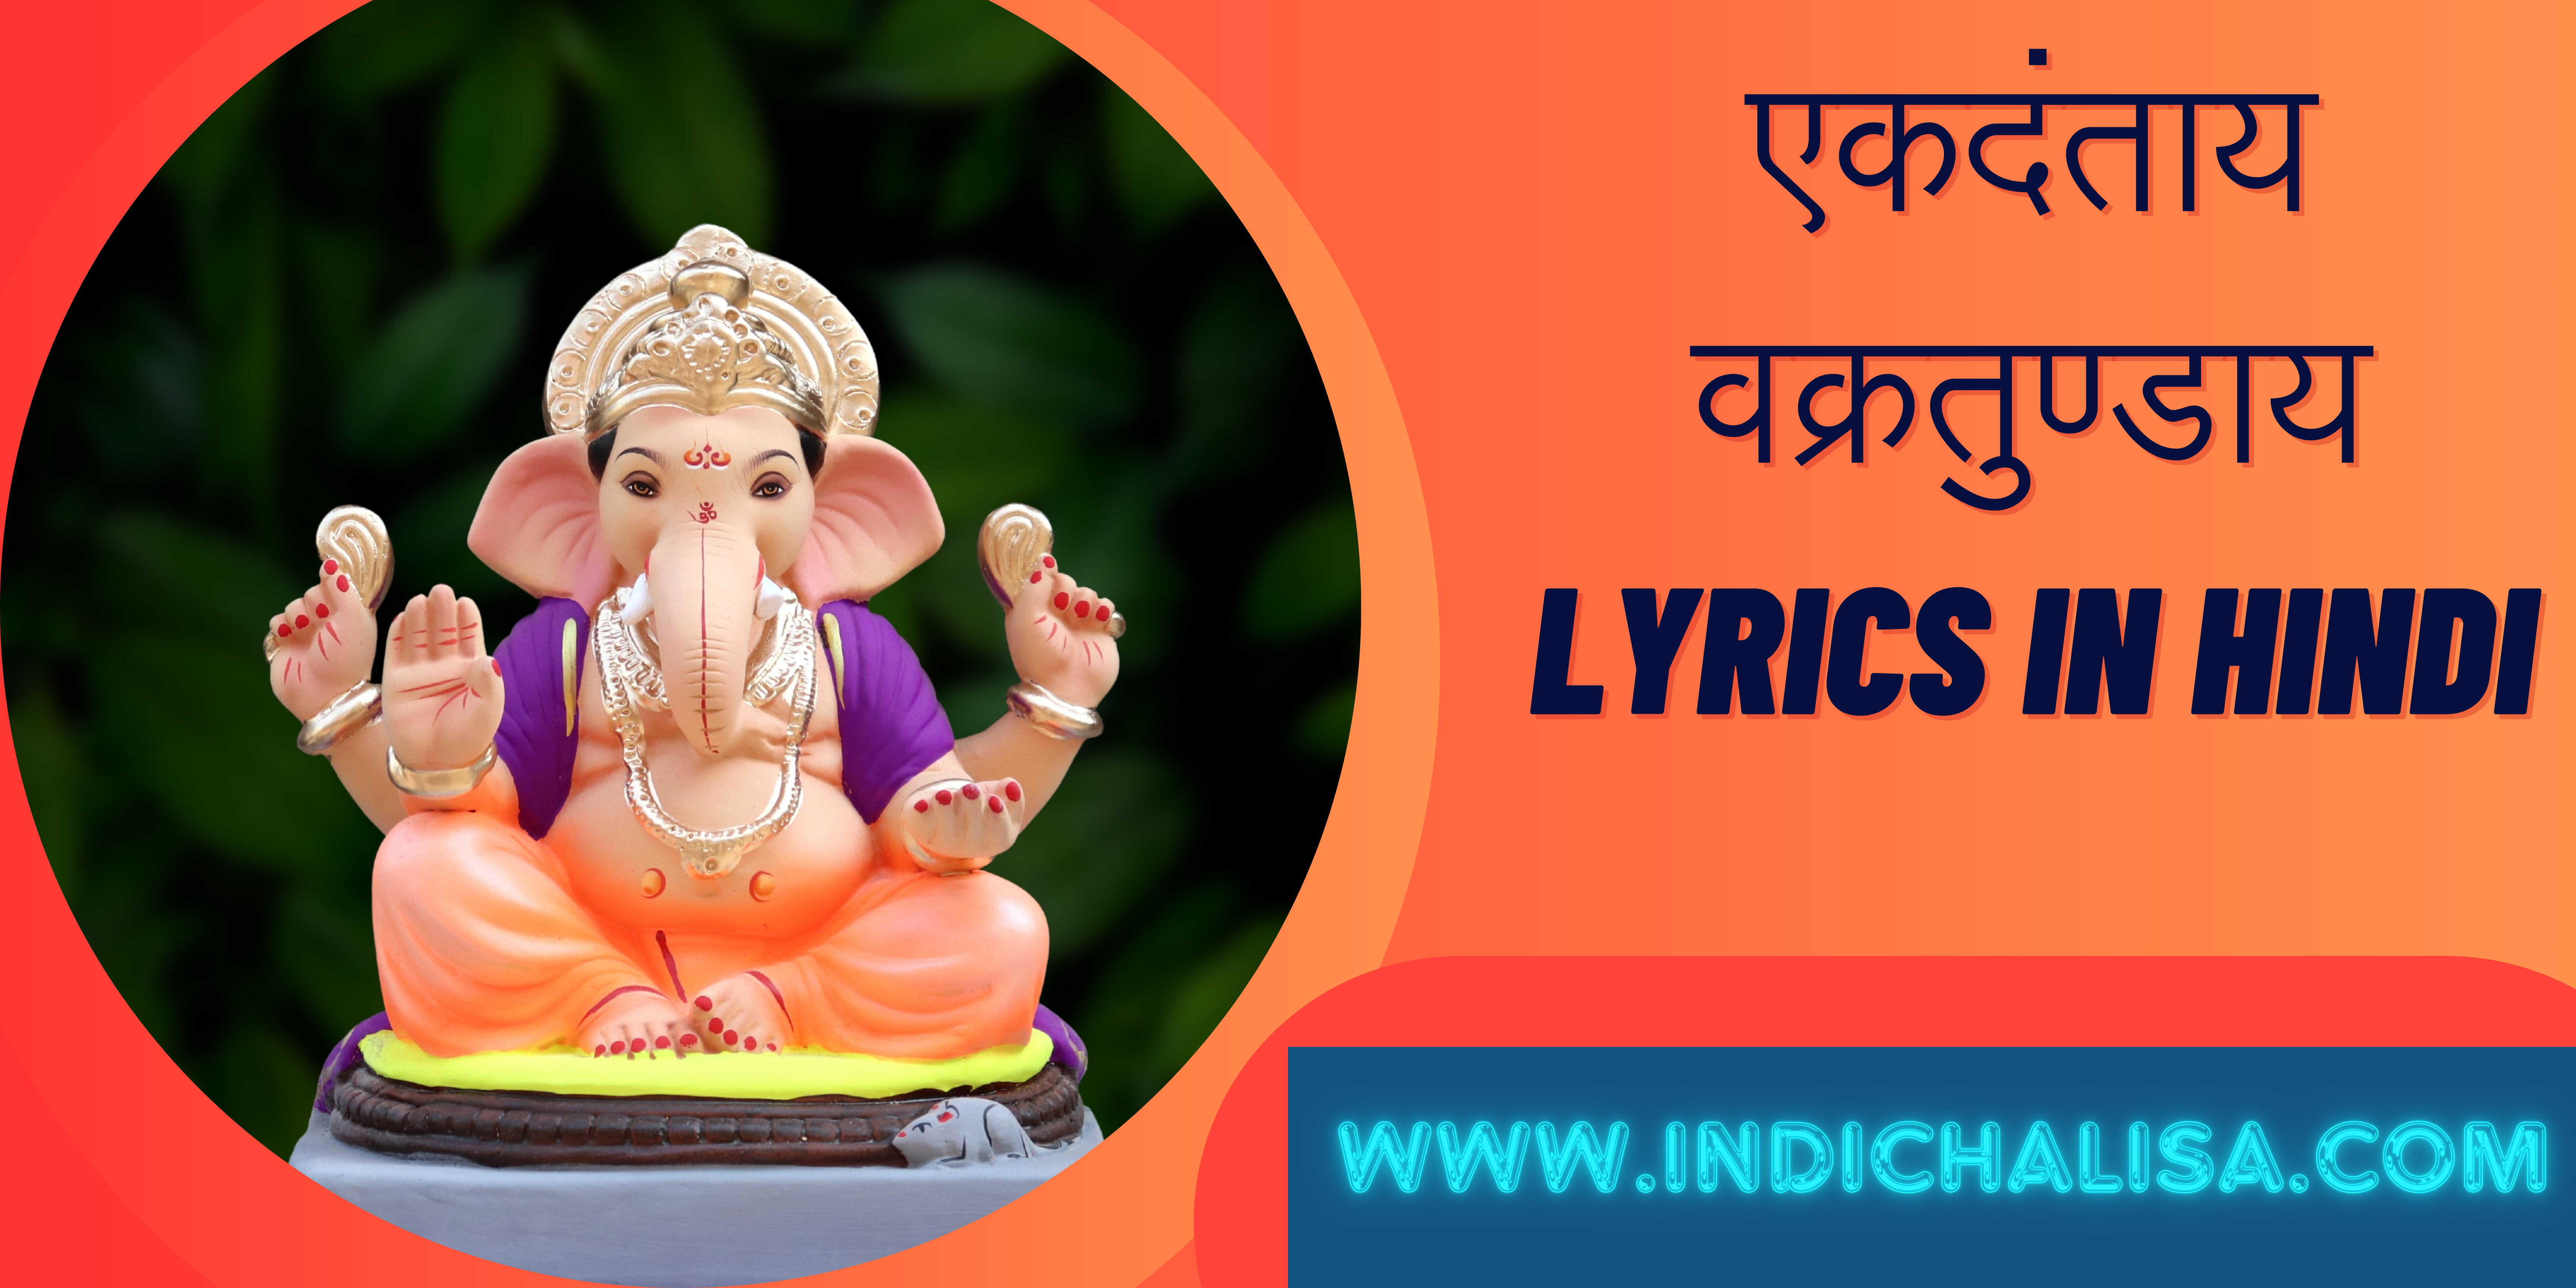 एकदंताय वक्रतुण्डाय Lyrics In Hindi|एकदंताय वक्रतुण्डाय Lyrics In Hindi|Indichalisa|Indichalisa